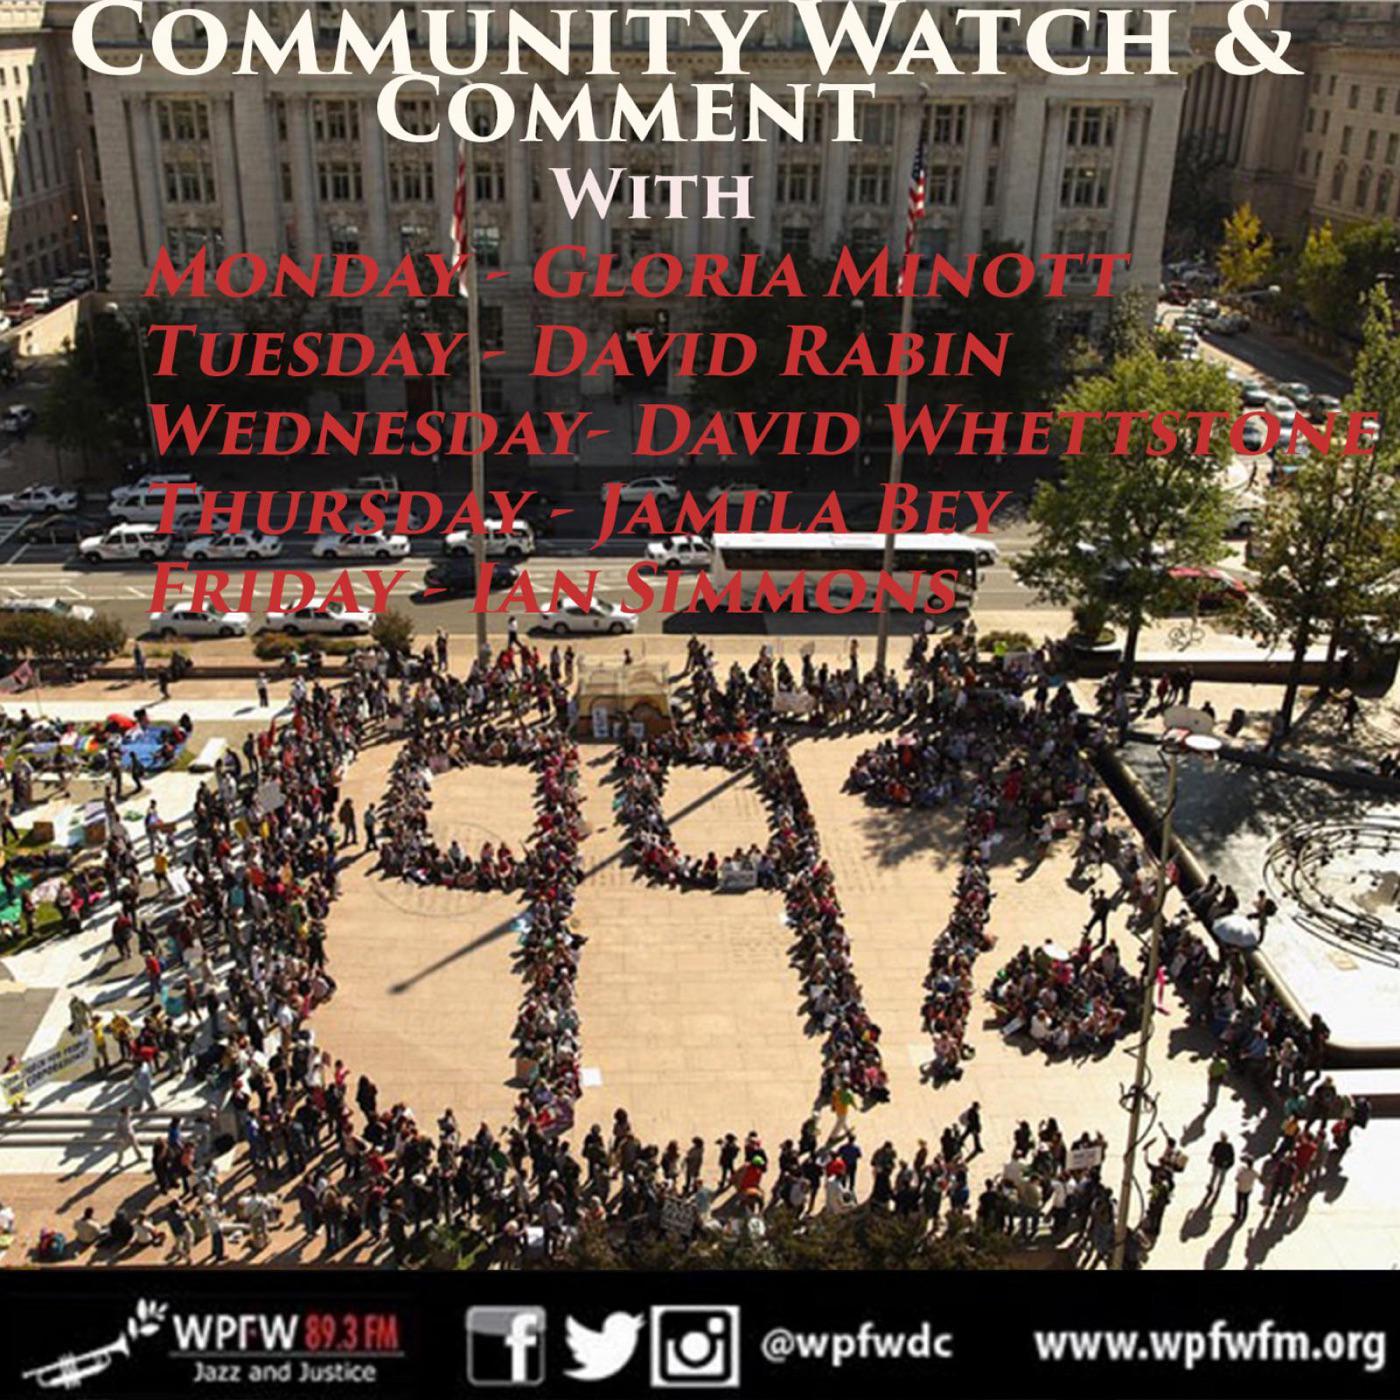 wpfw-community-watch-comment-tuesday-david-431BQAYVpJH-3GbDochzeHA